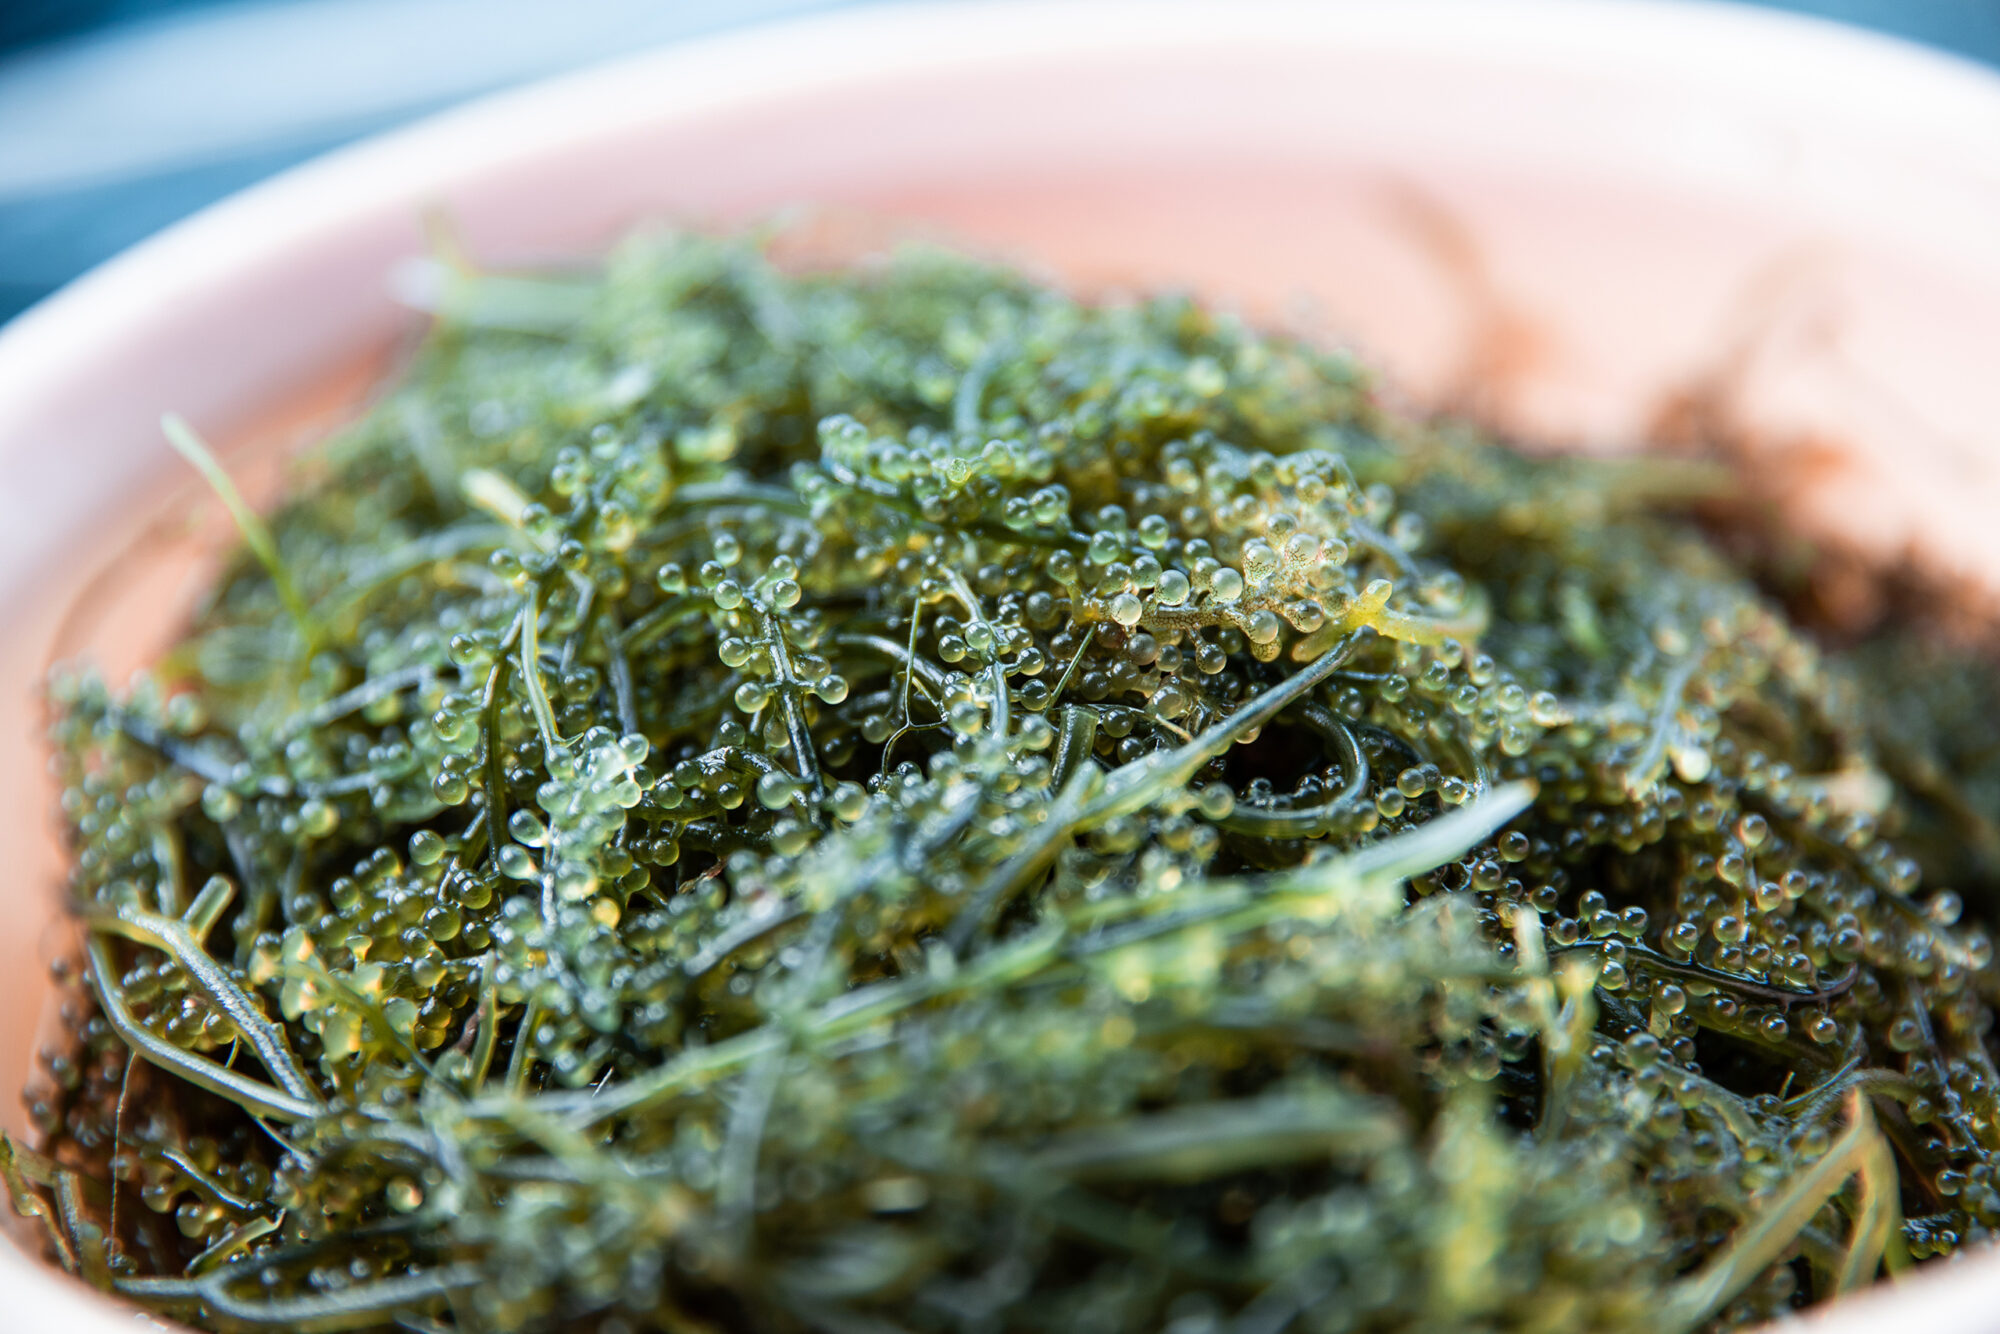 Seagrape, a seaweed, is already being farmed in Huiwen